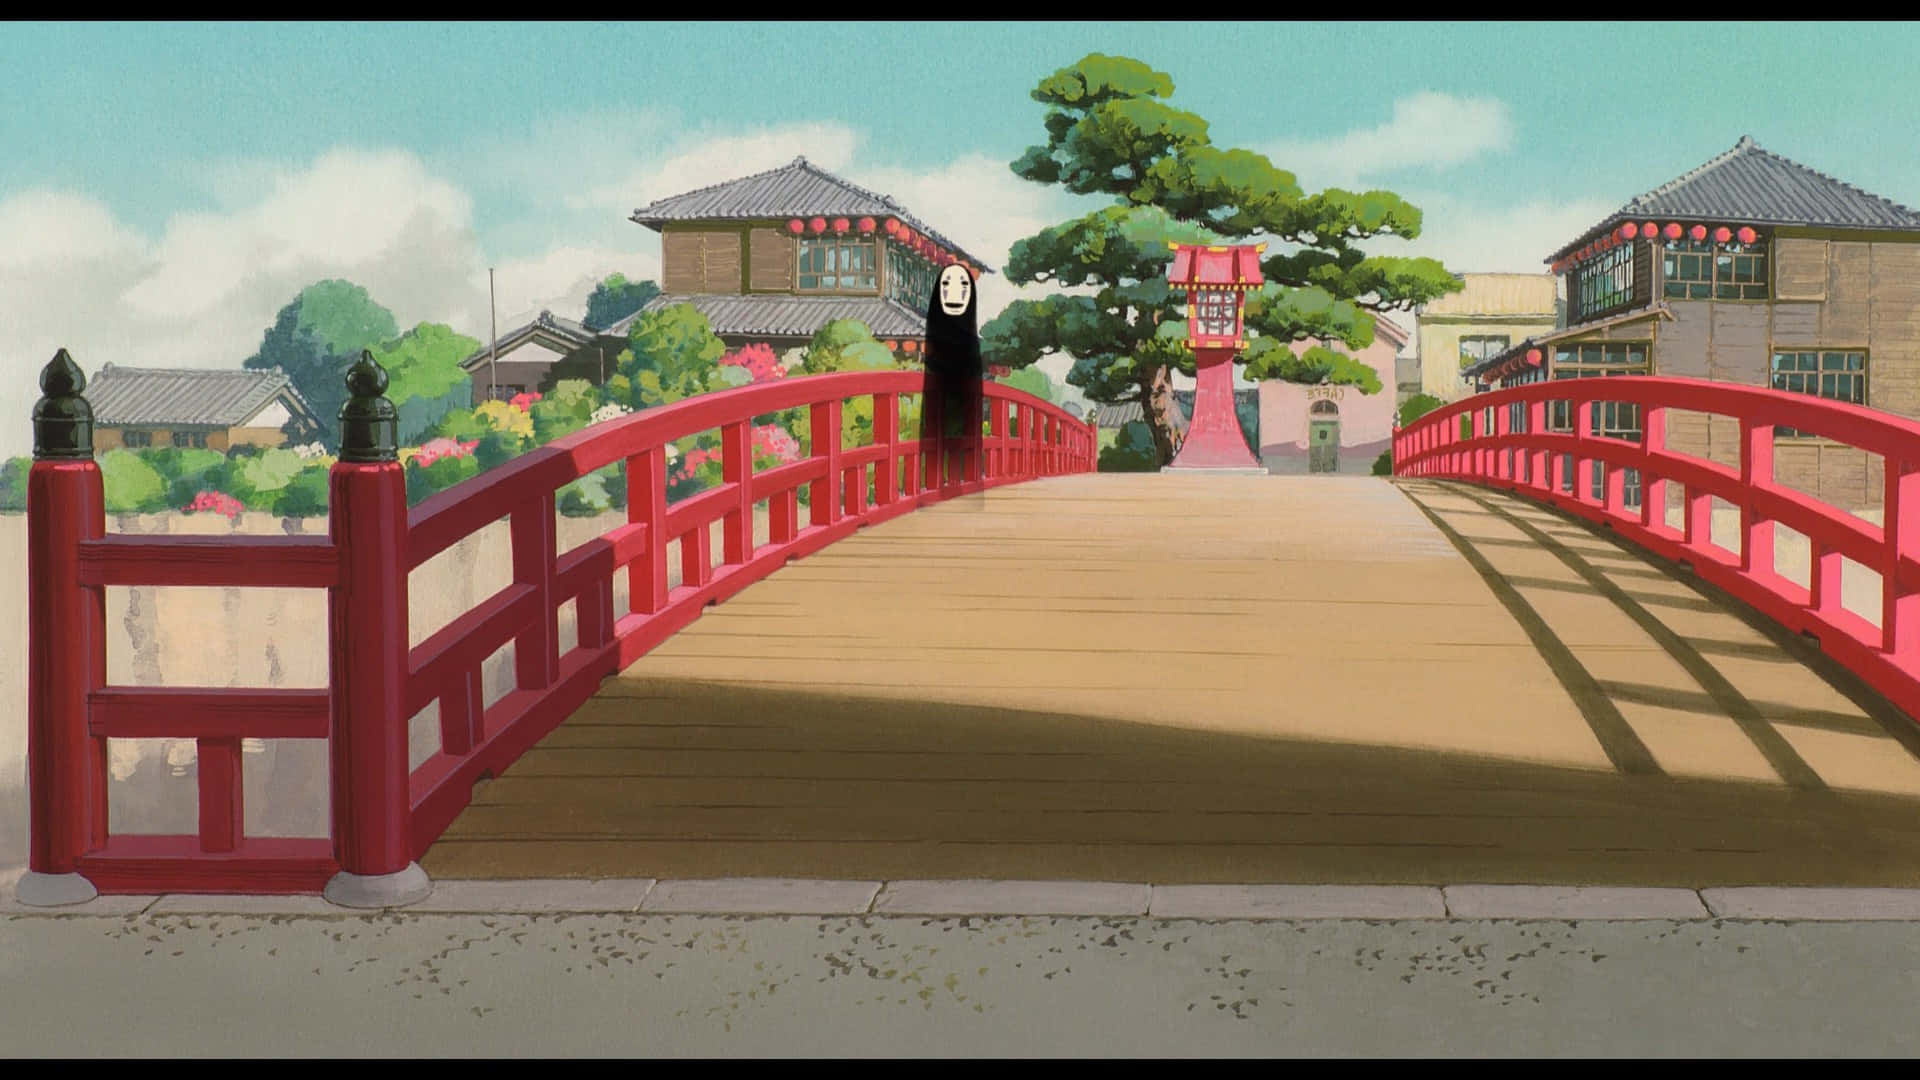 Caption: Enchanting Studio Ghibli Scenery